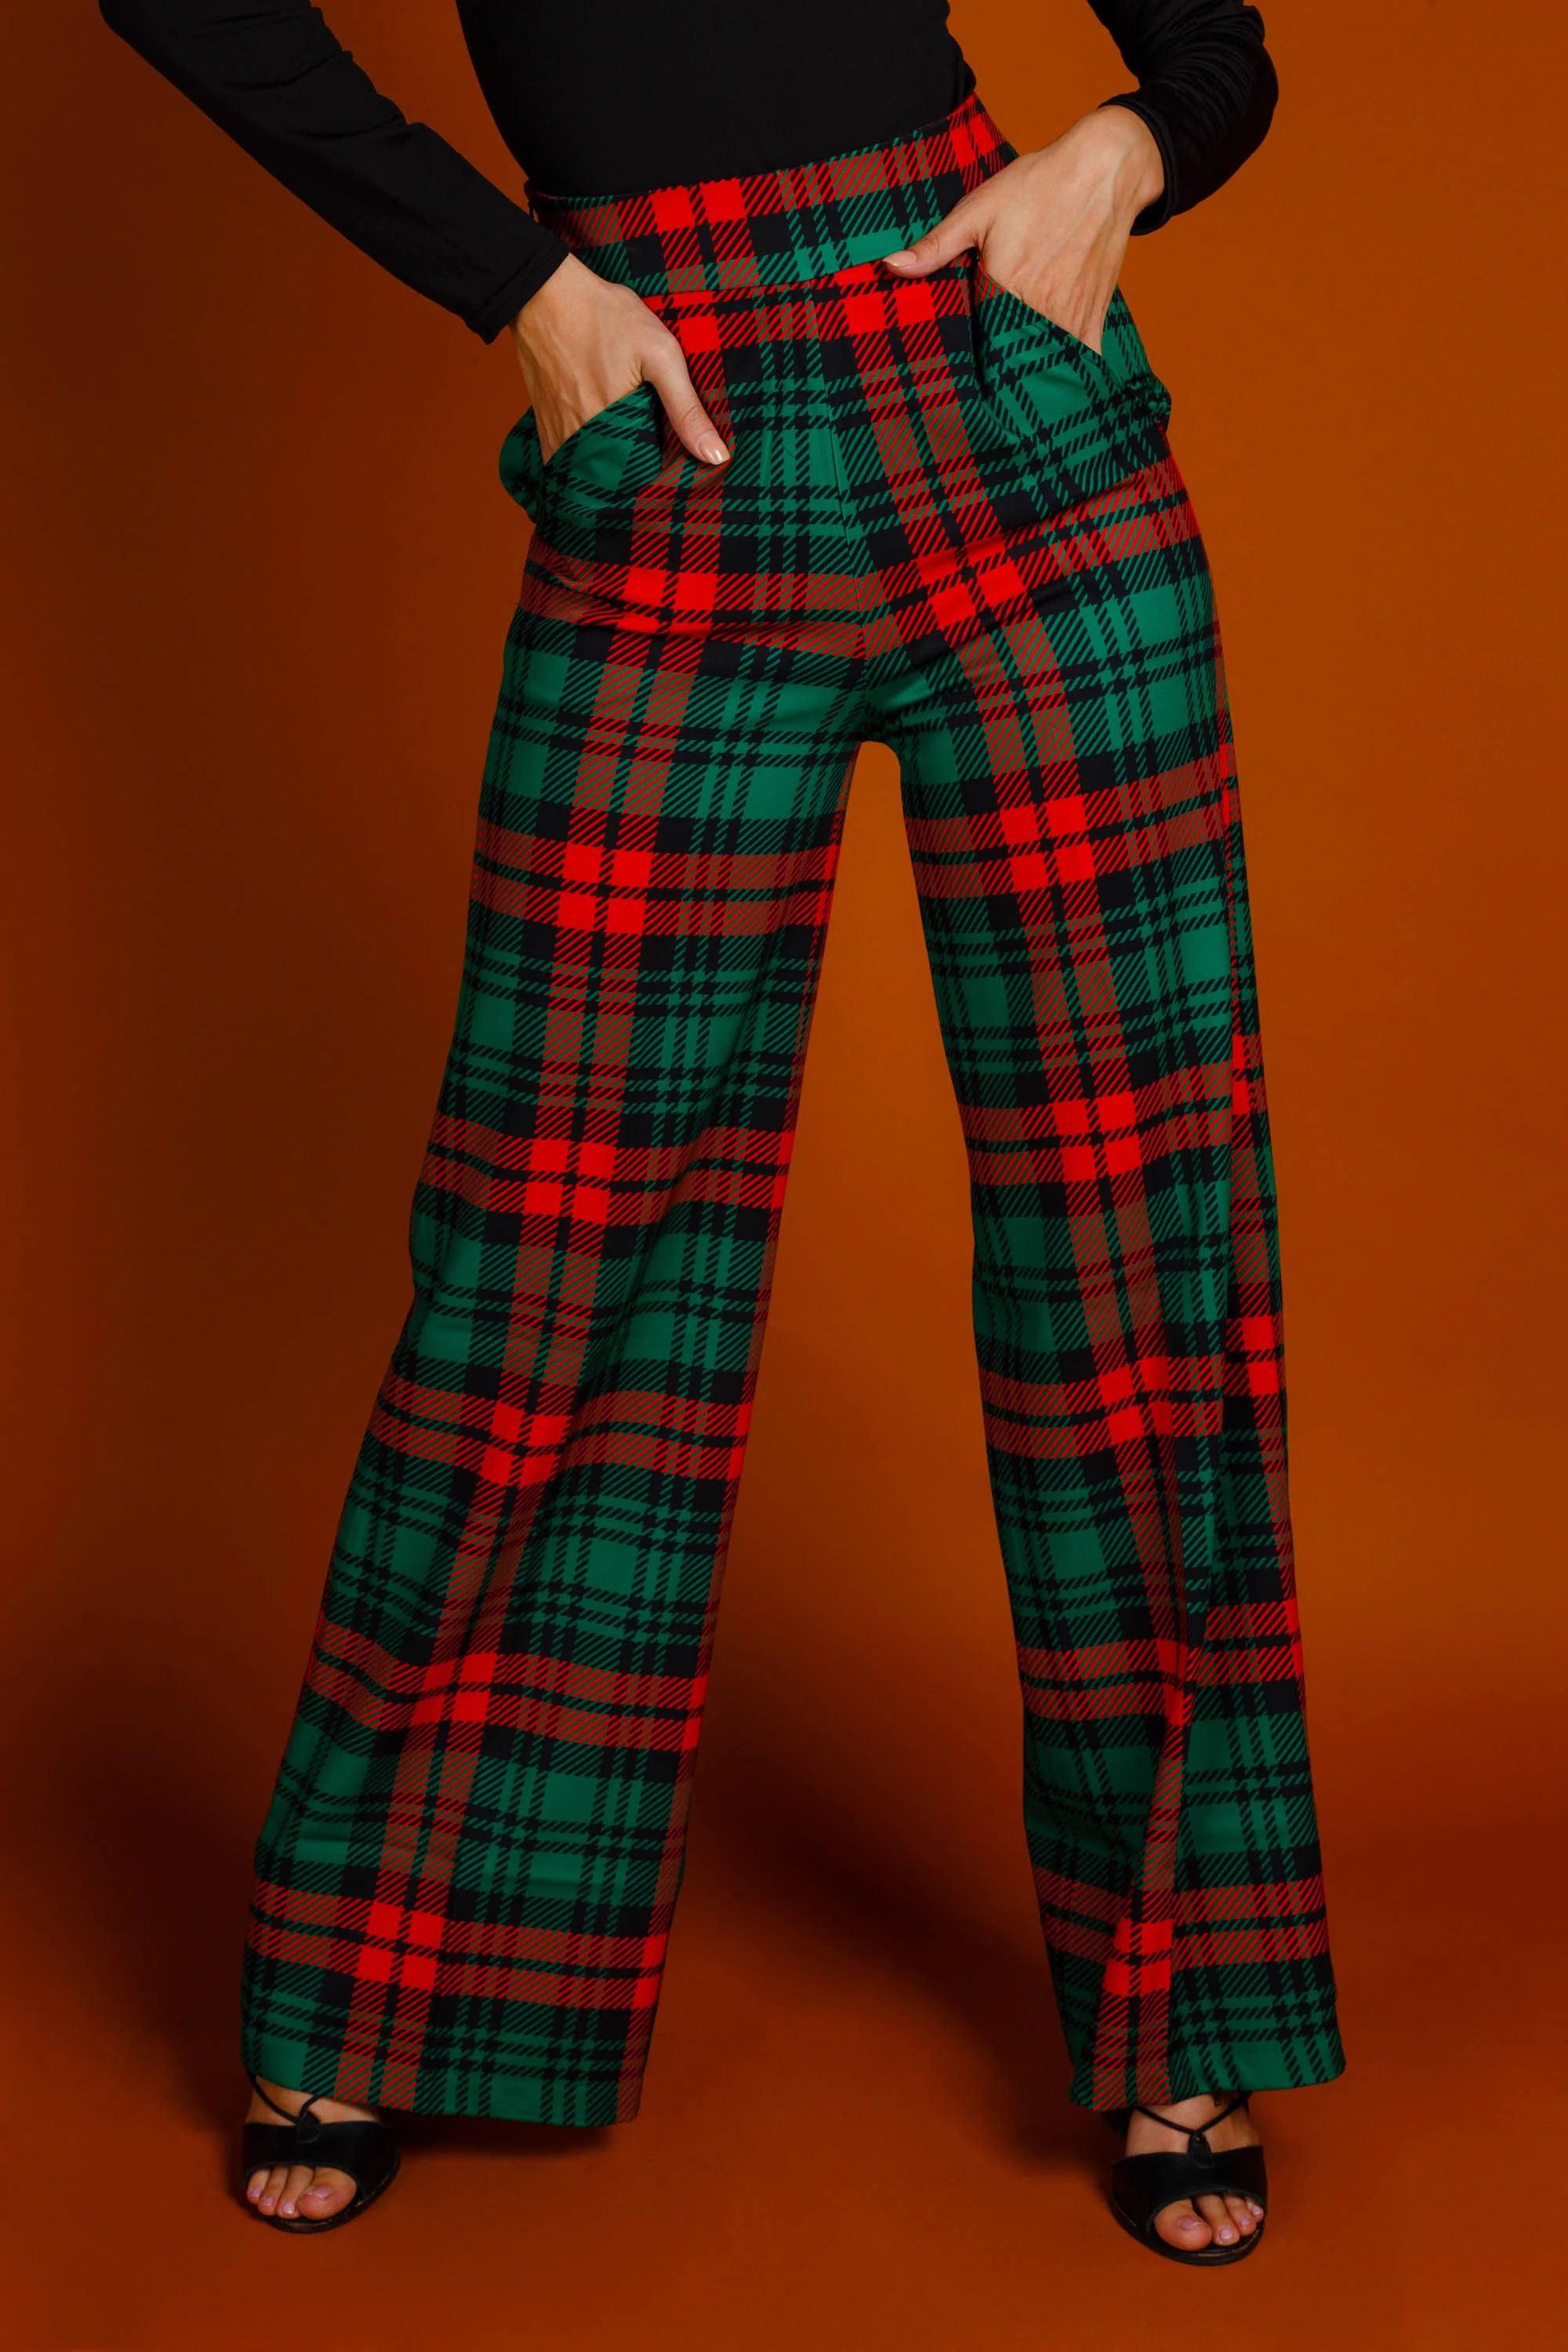 The Lincoln Log Love LadyWomen's Green Plaid Christmas Pants | Shinesty